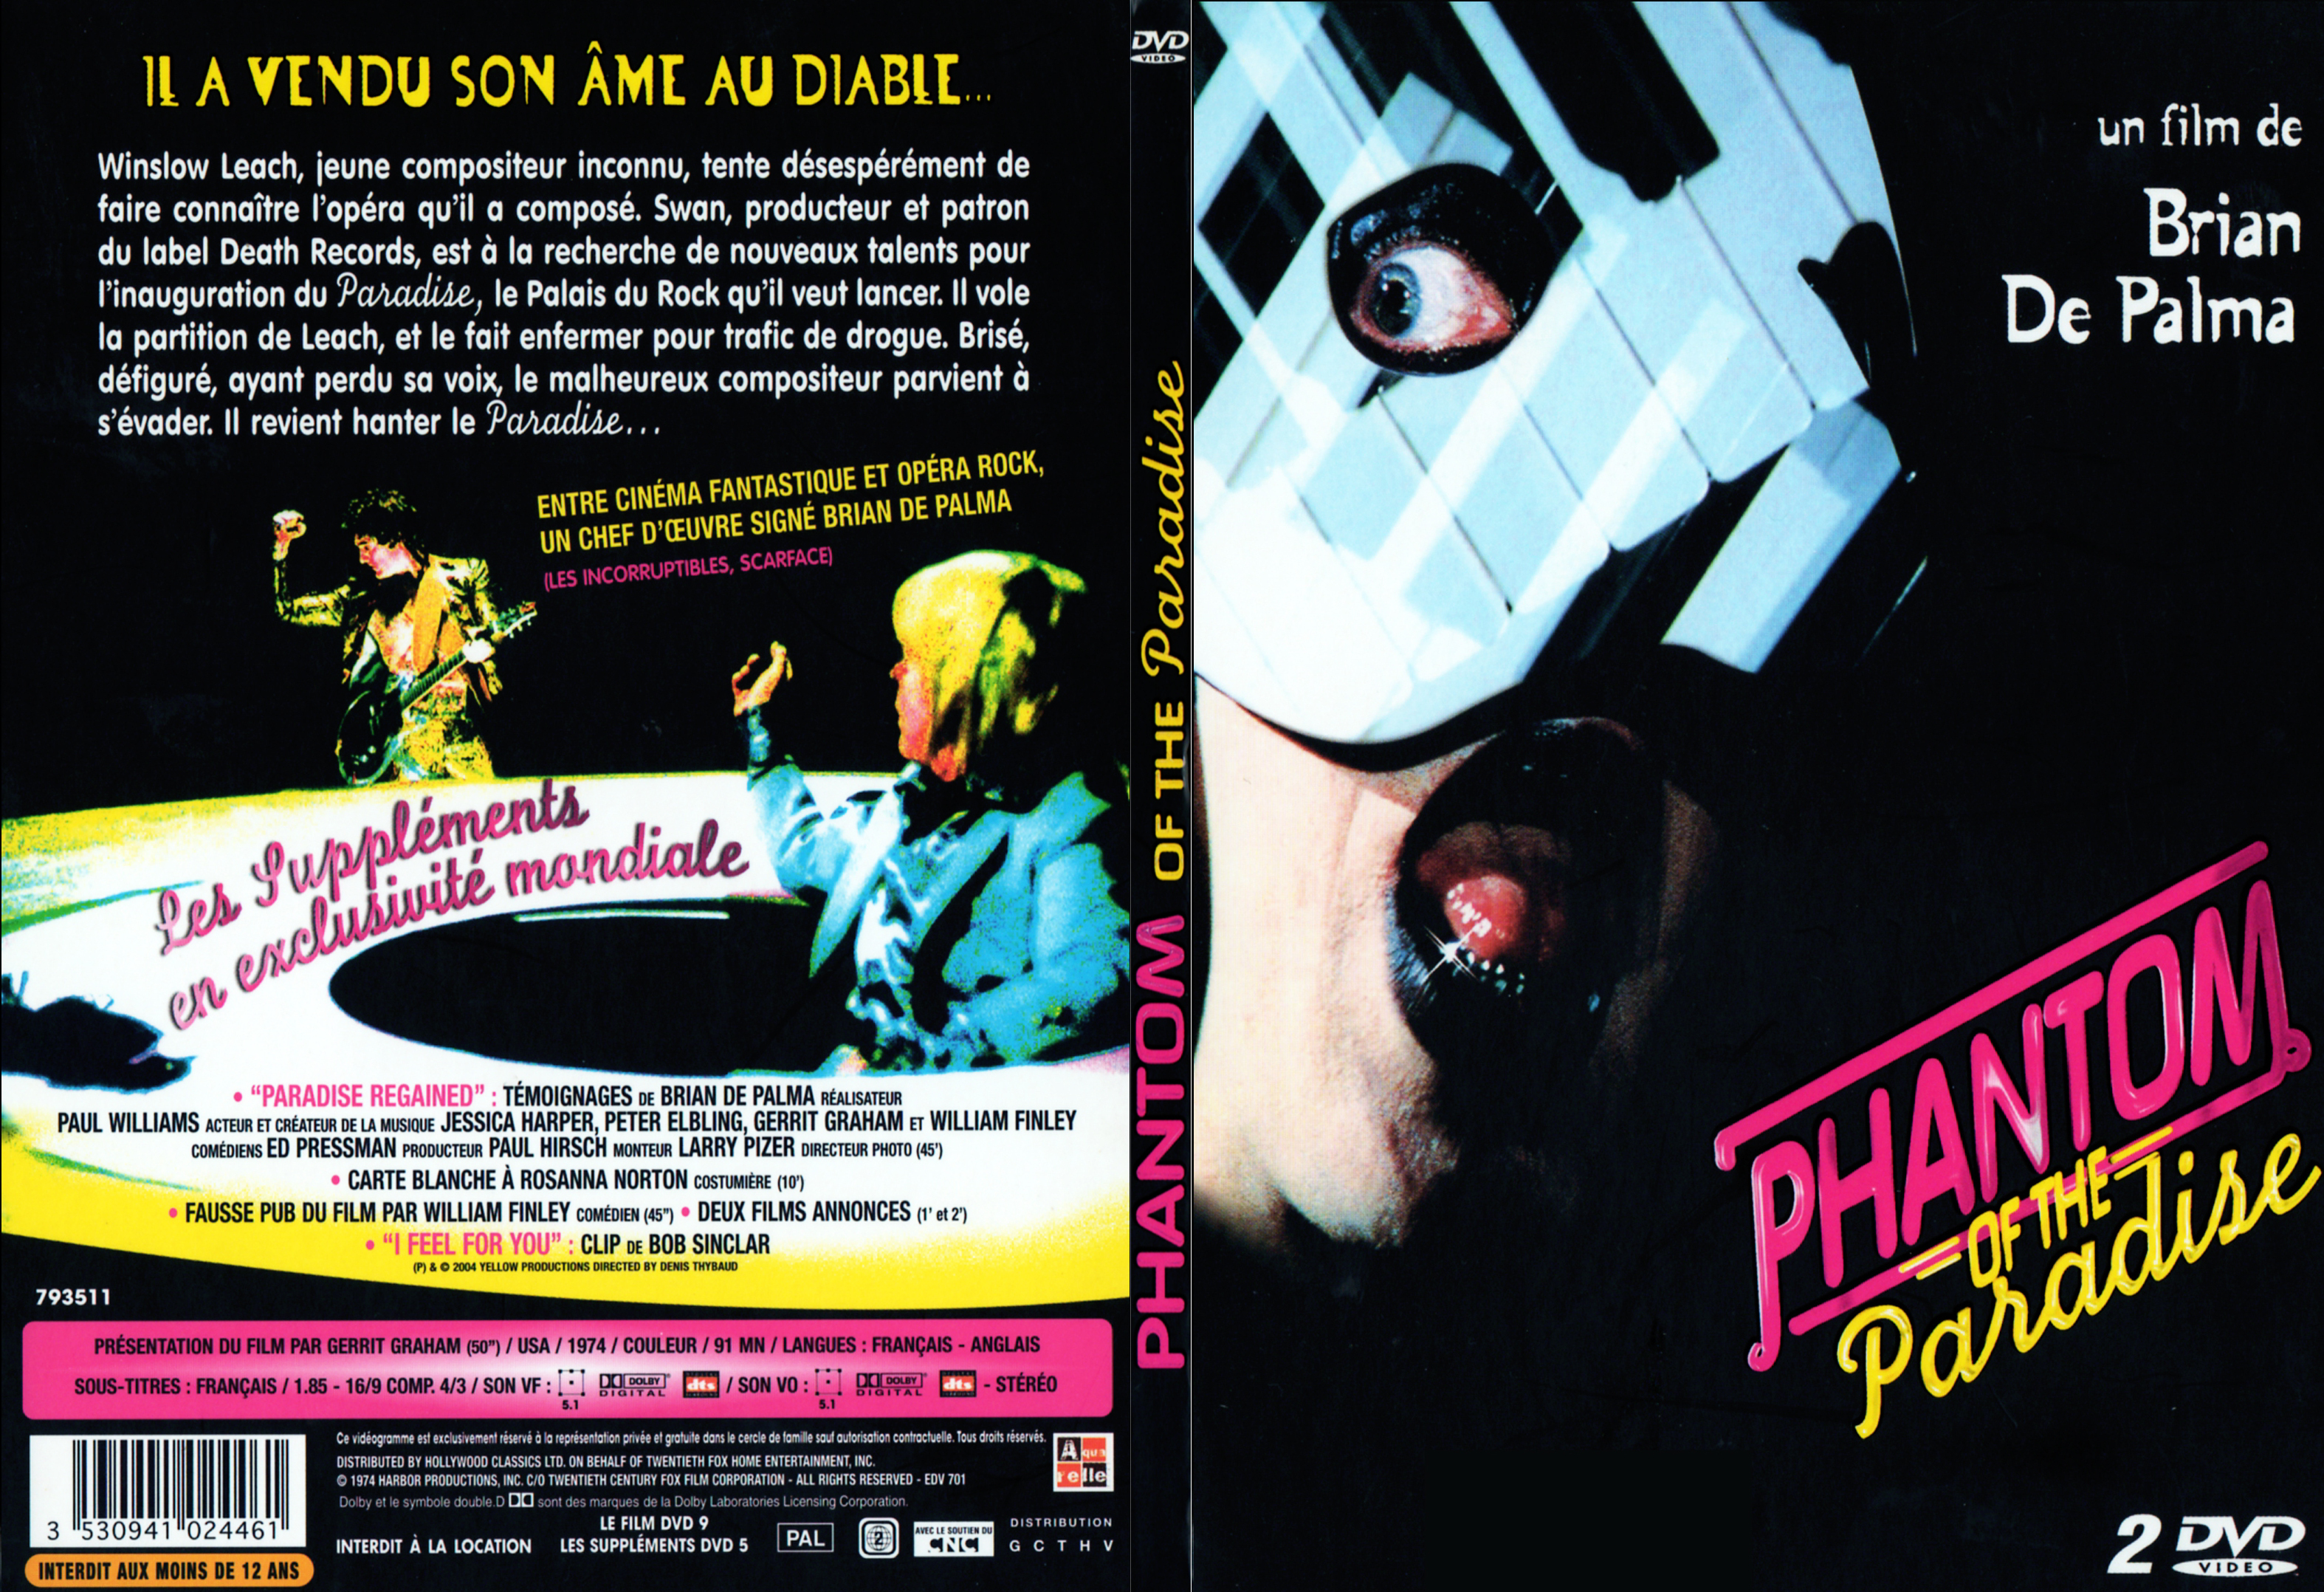 Jaquette DVD Phantom of the paradise - SLIM v3